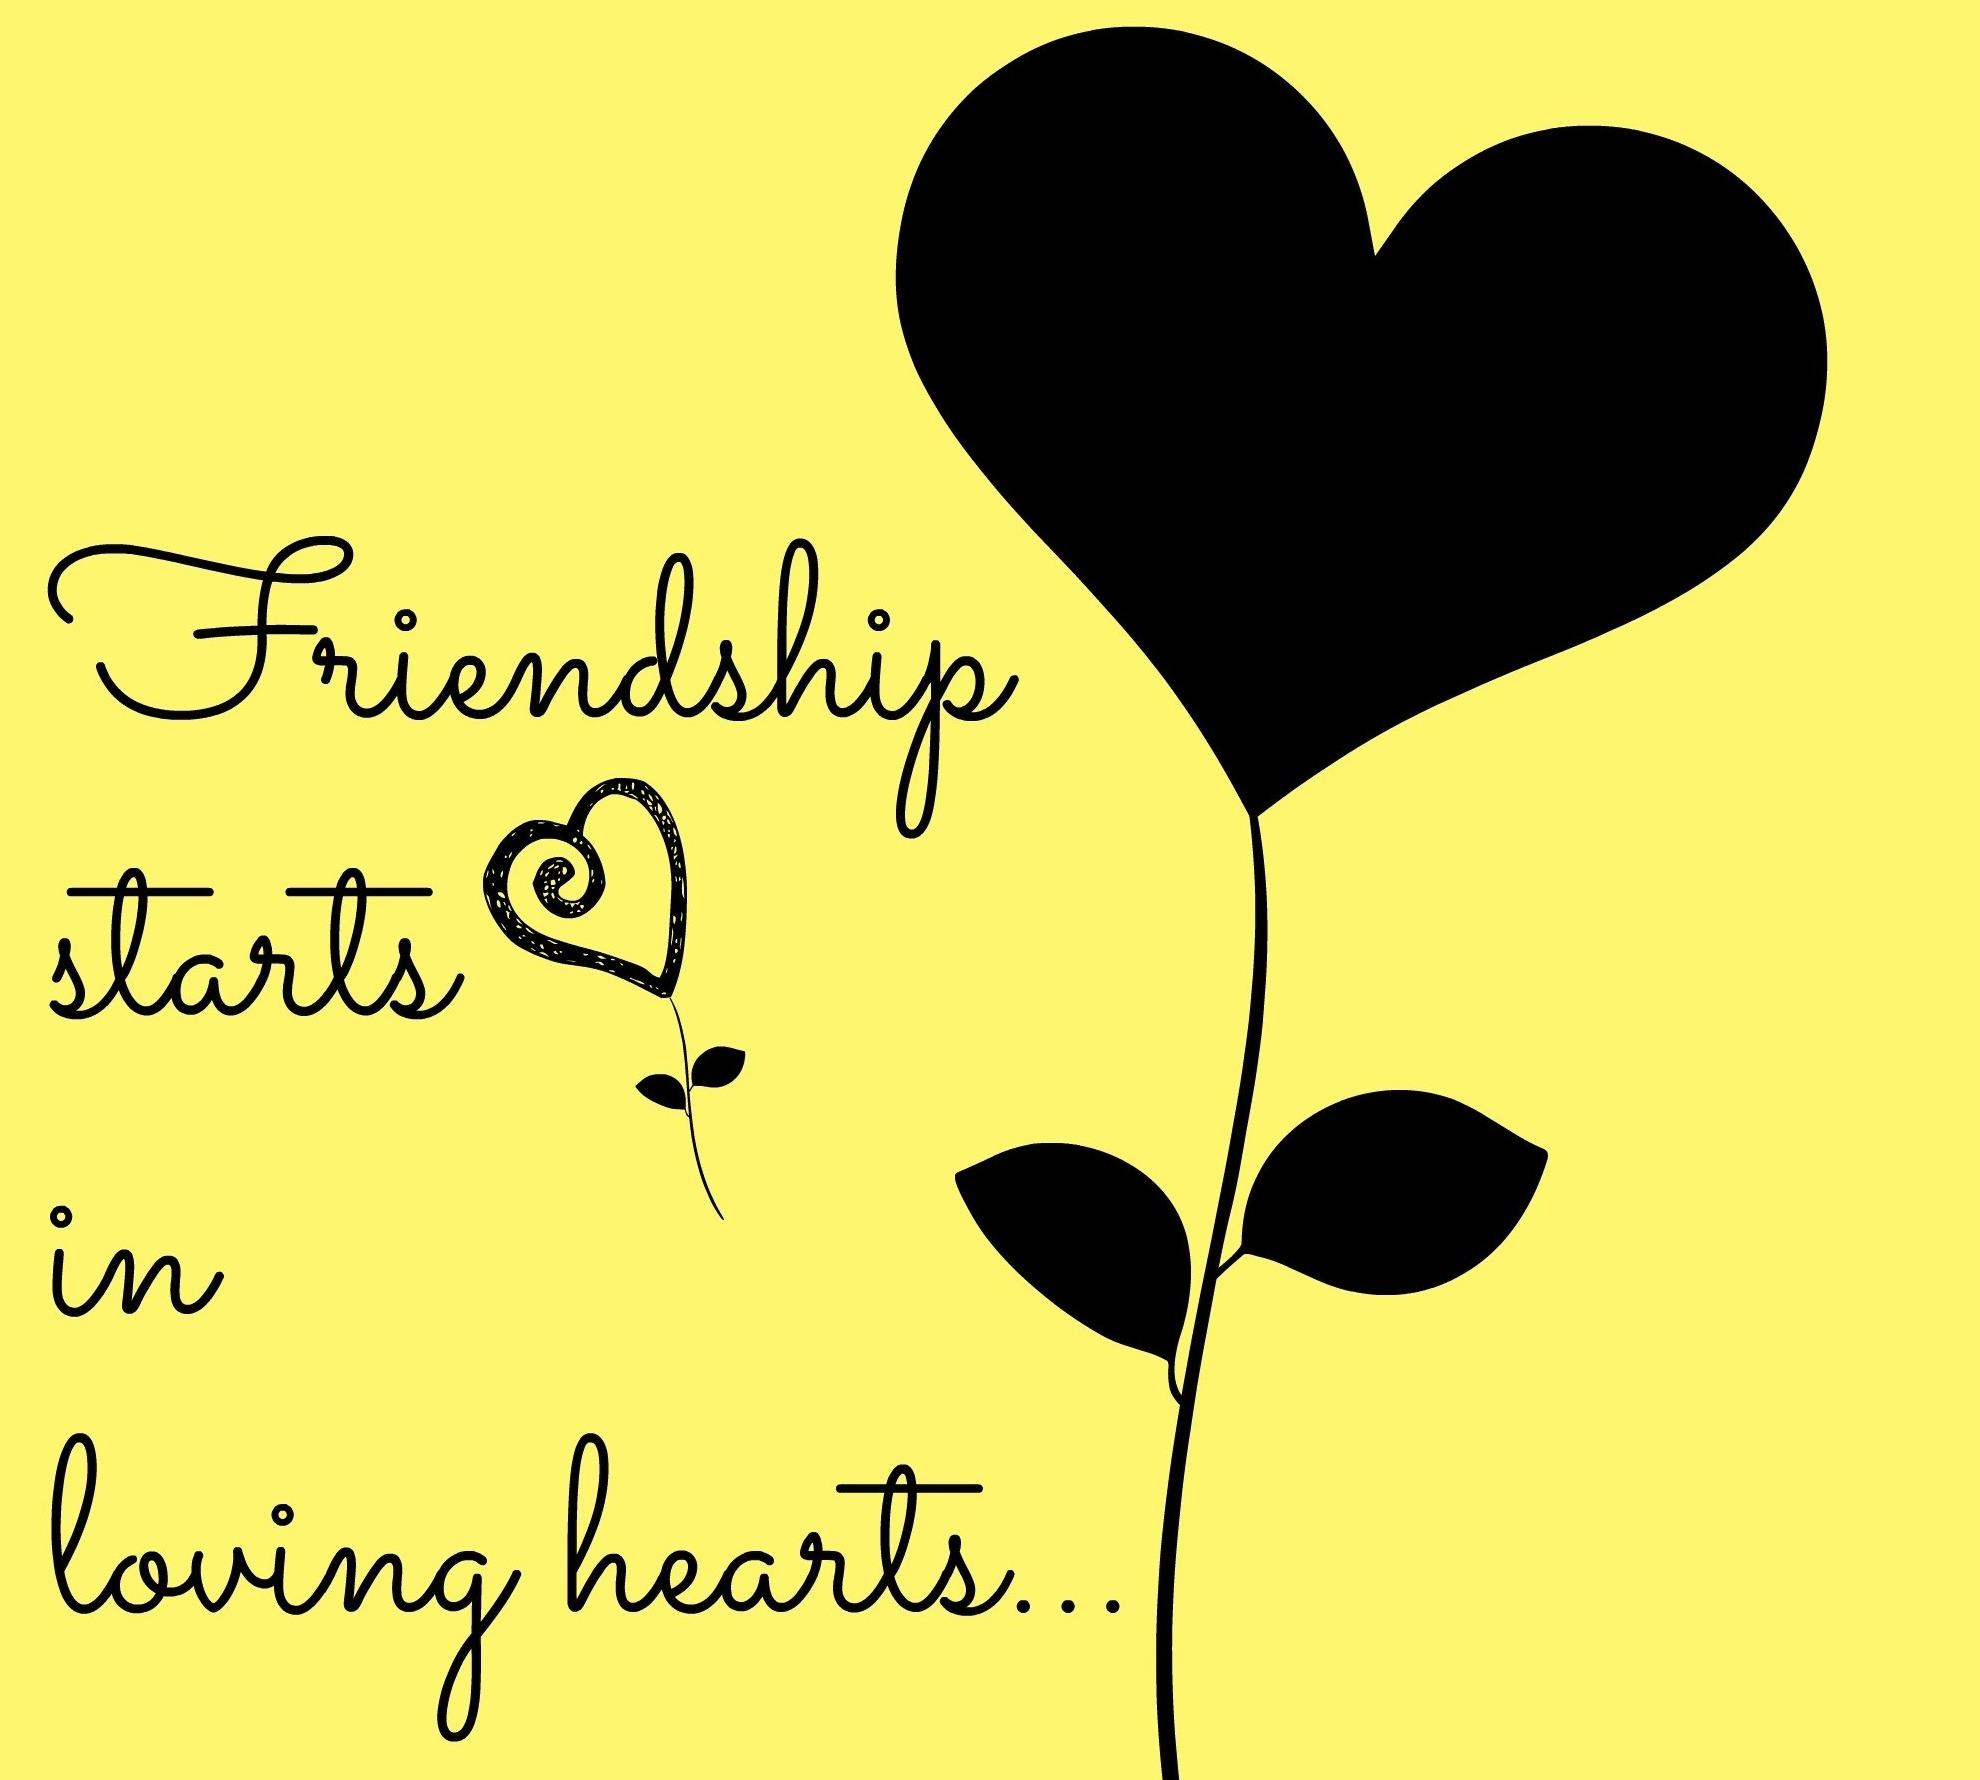 Friendship Starts In Loving Hearts